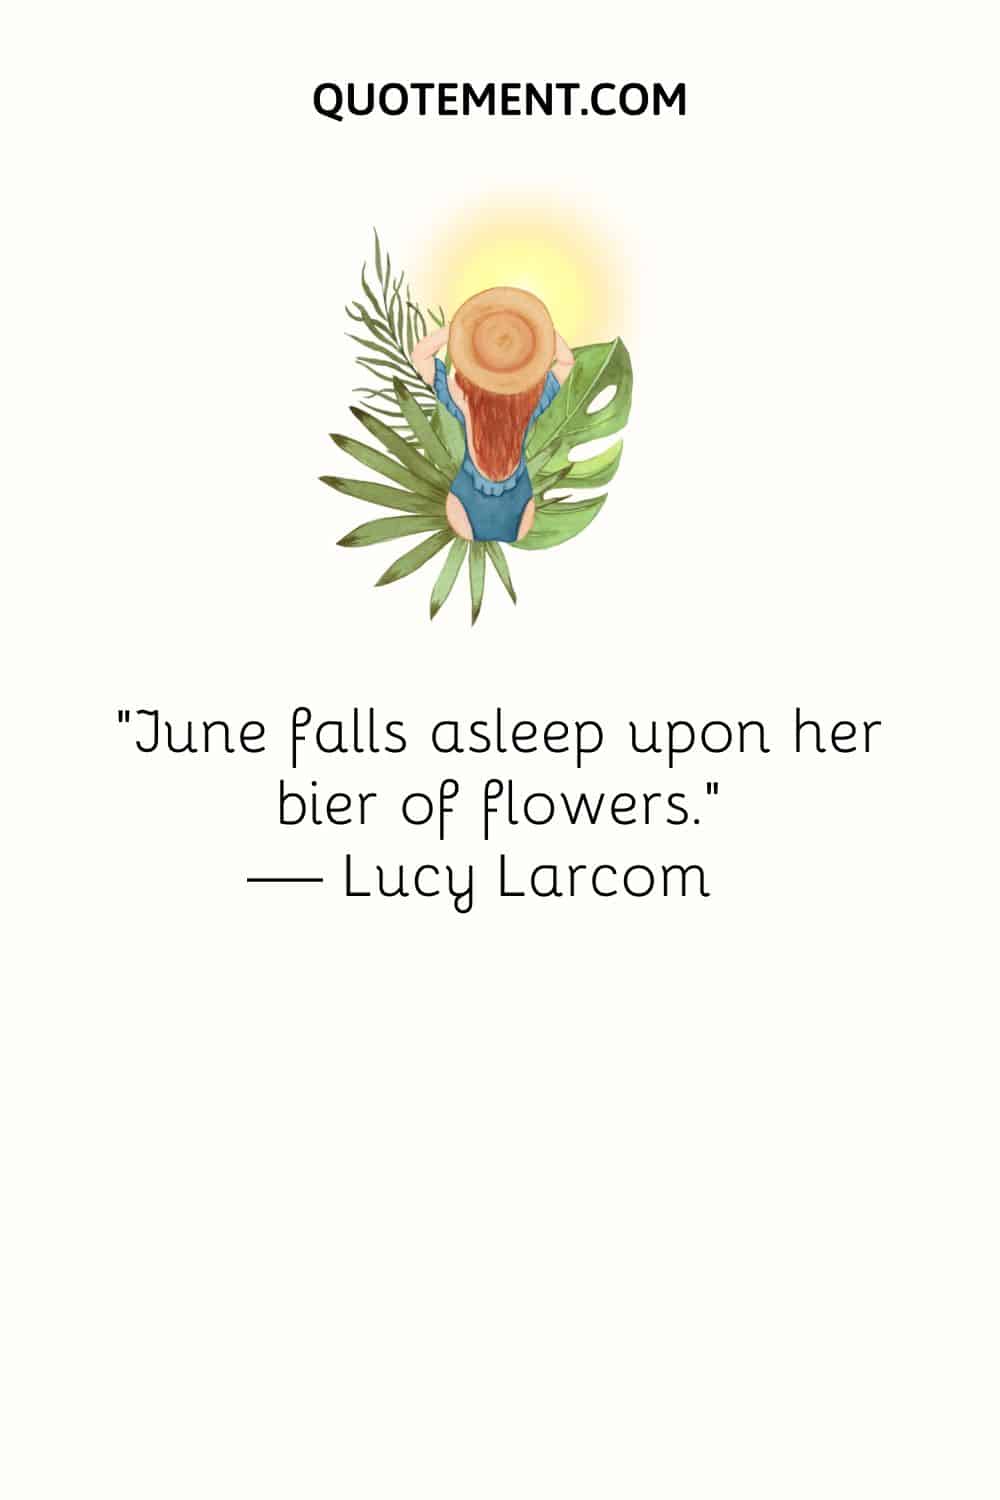 “June falls asleep upon her bier of flowers.” — Lucy Larcom